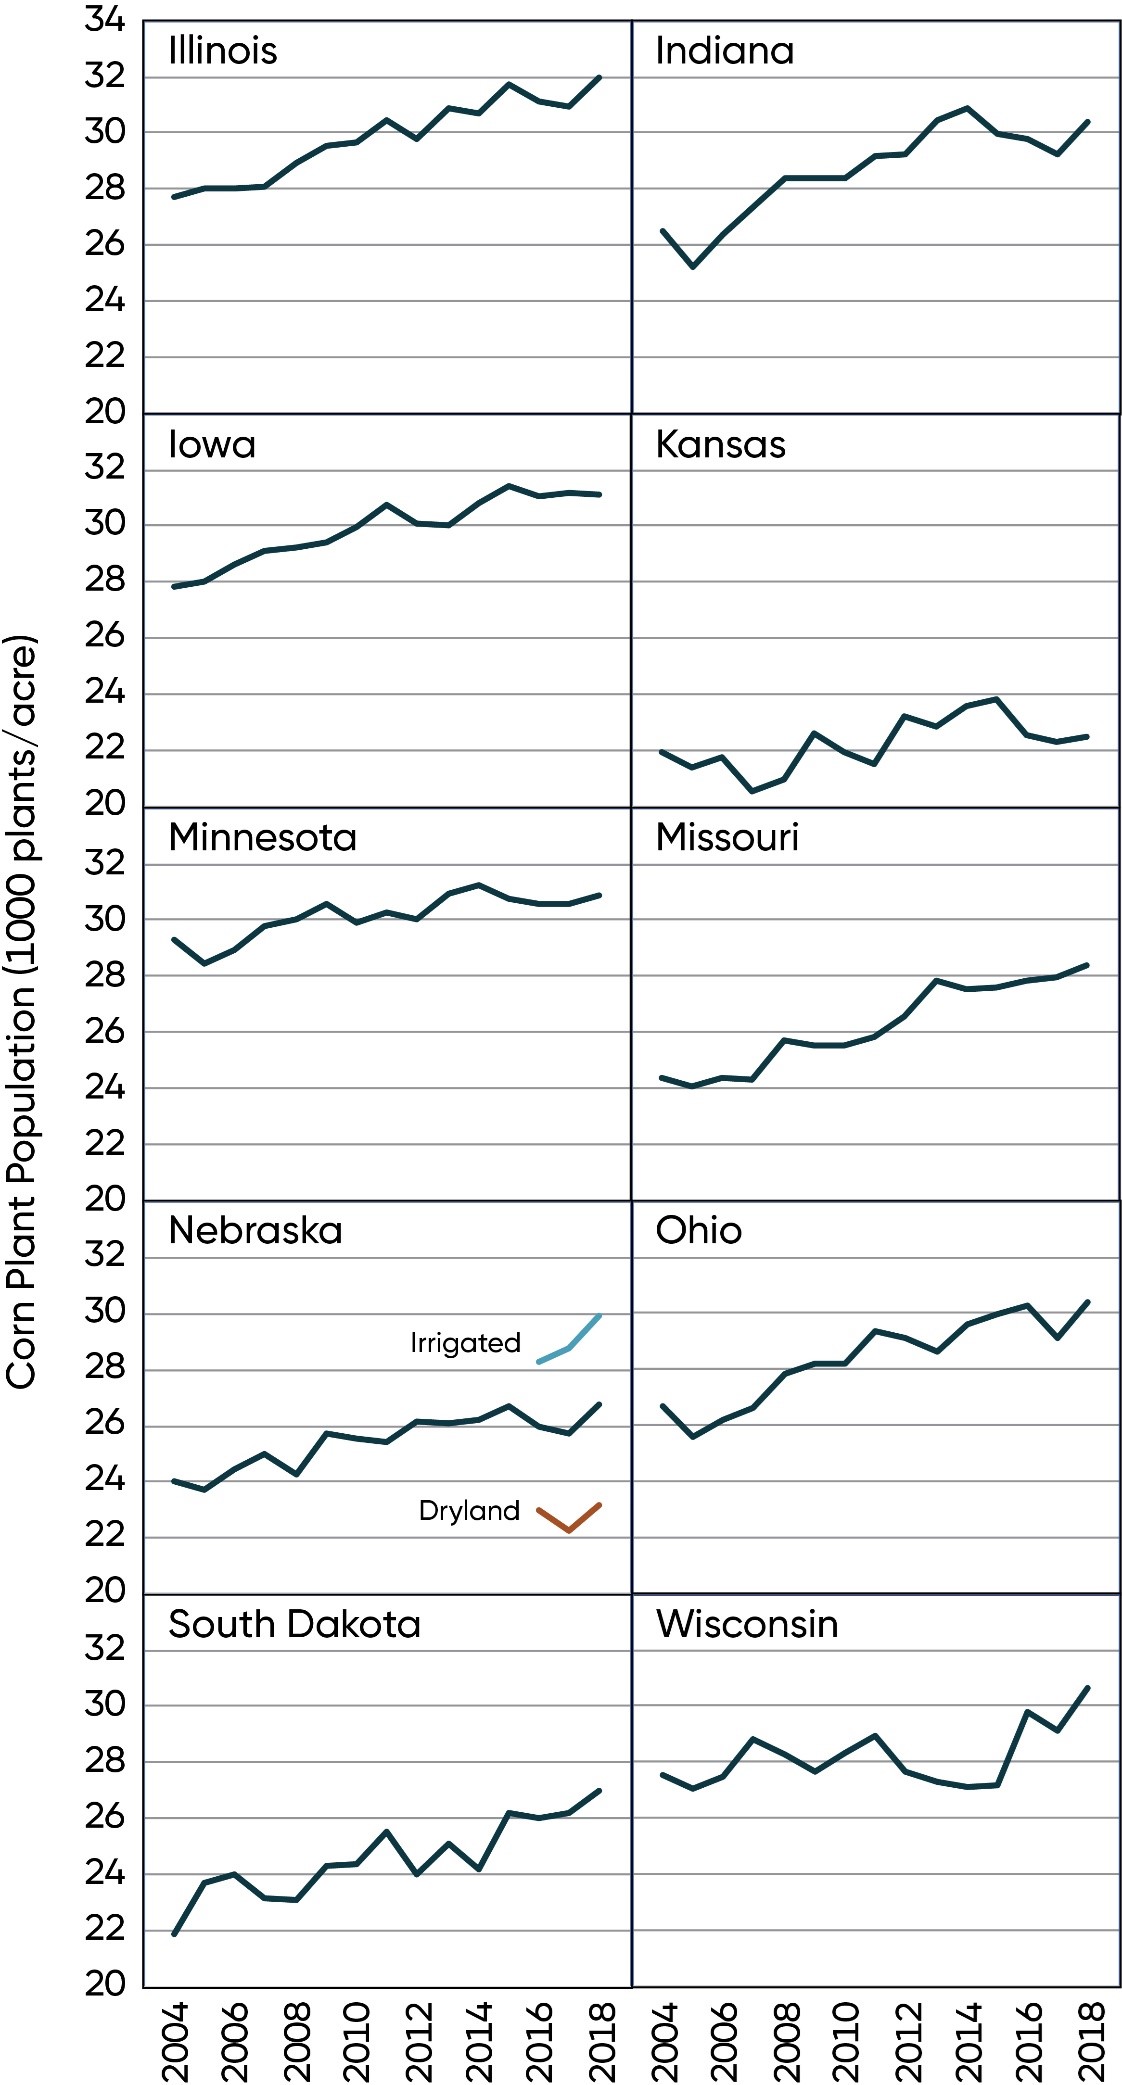 Average corn plant populations for major corn-producing states, 2004-2018 (USDA NASS).